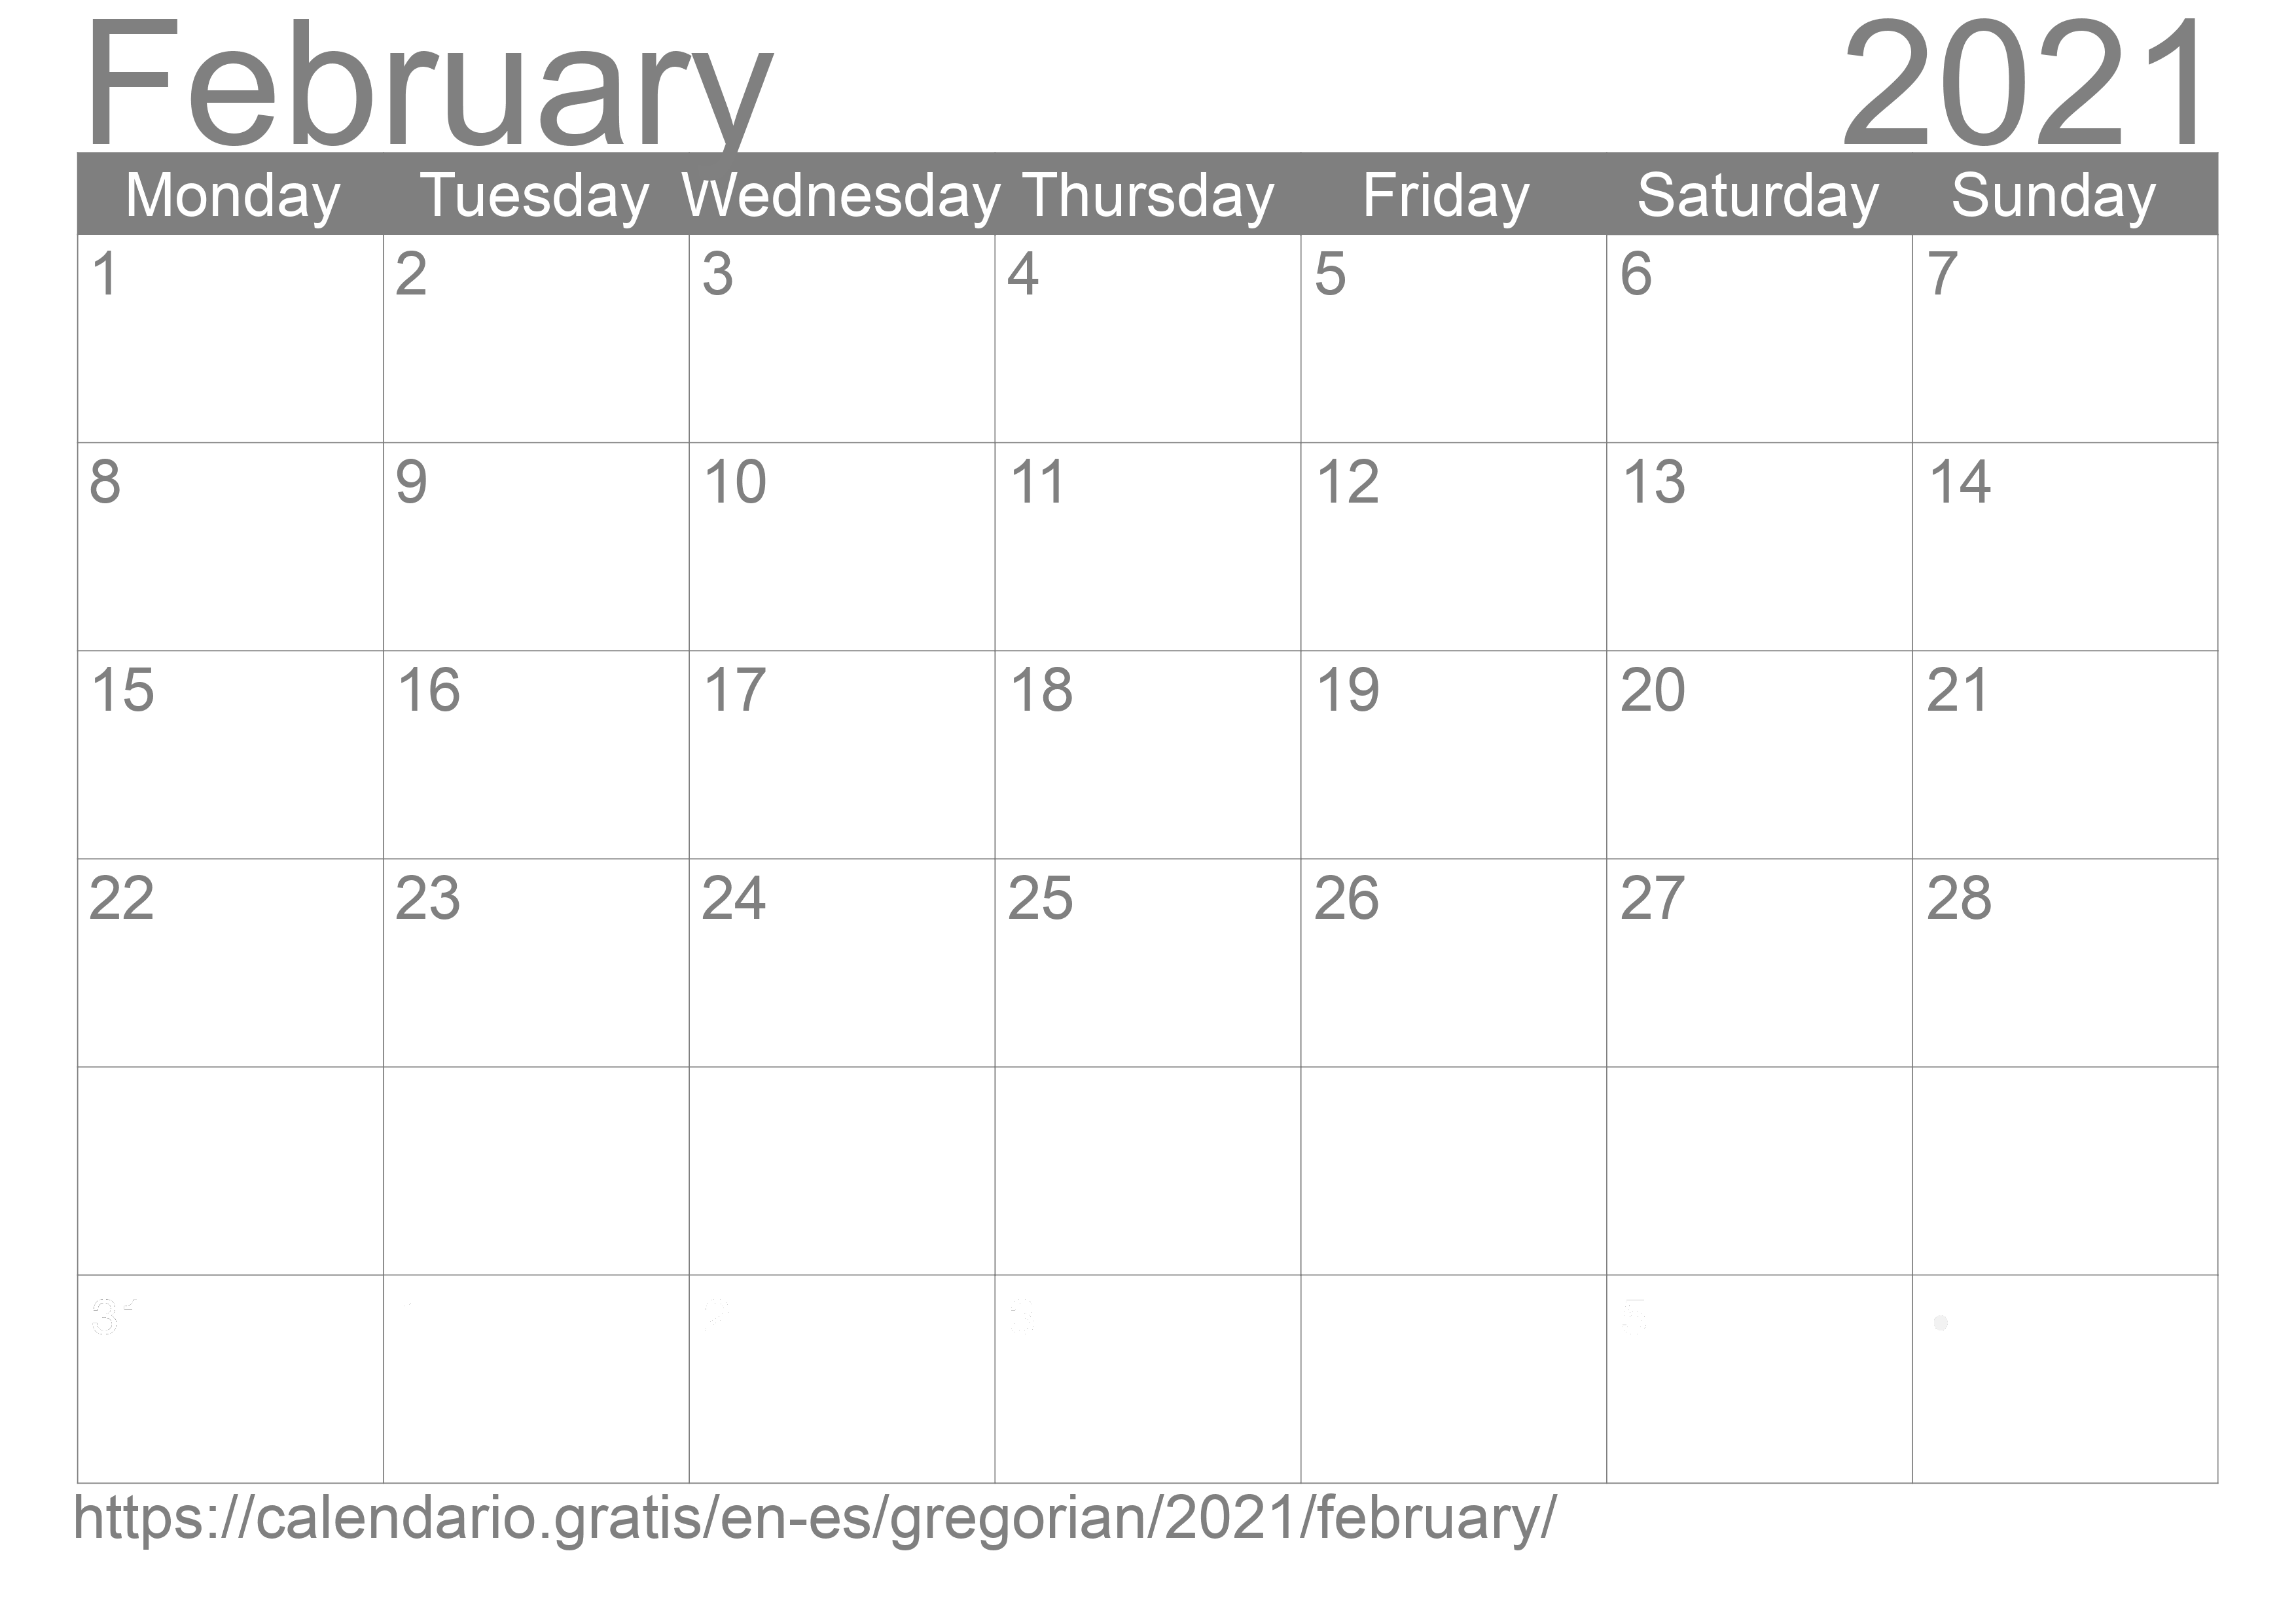 Calendar February 2021 to print